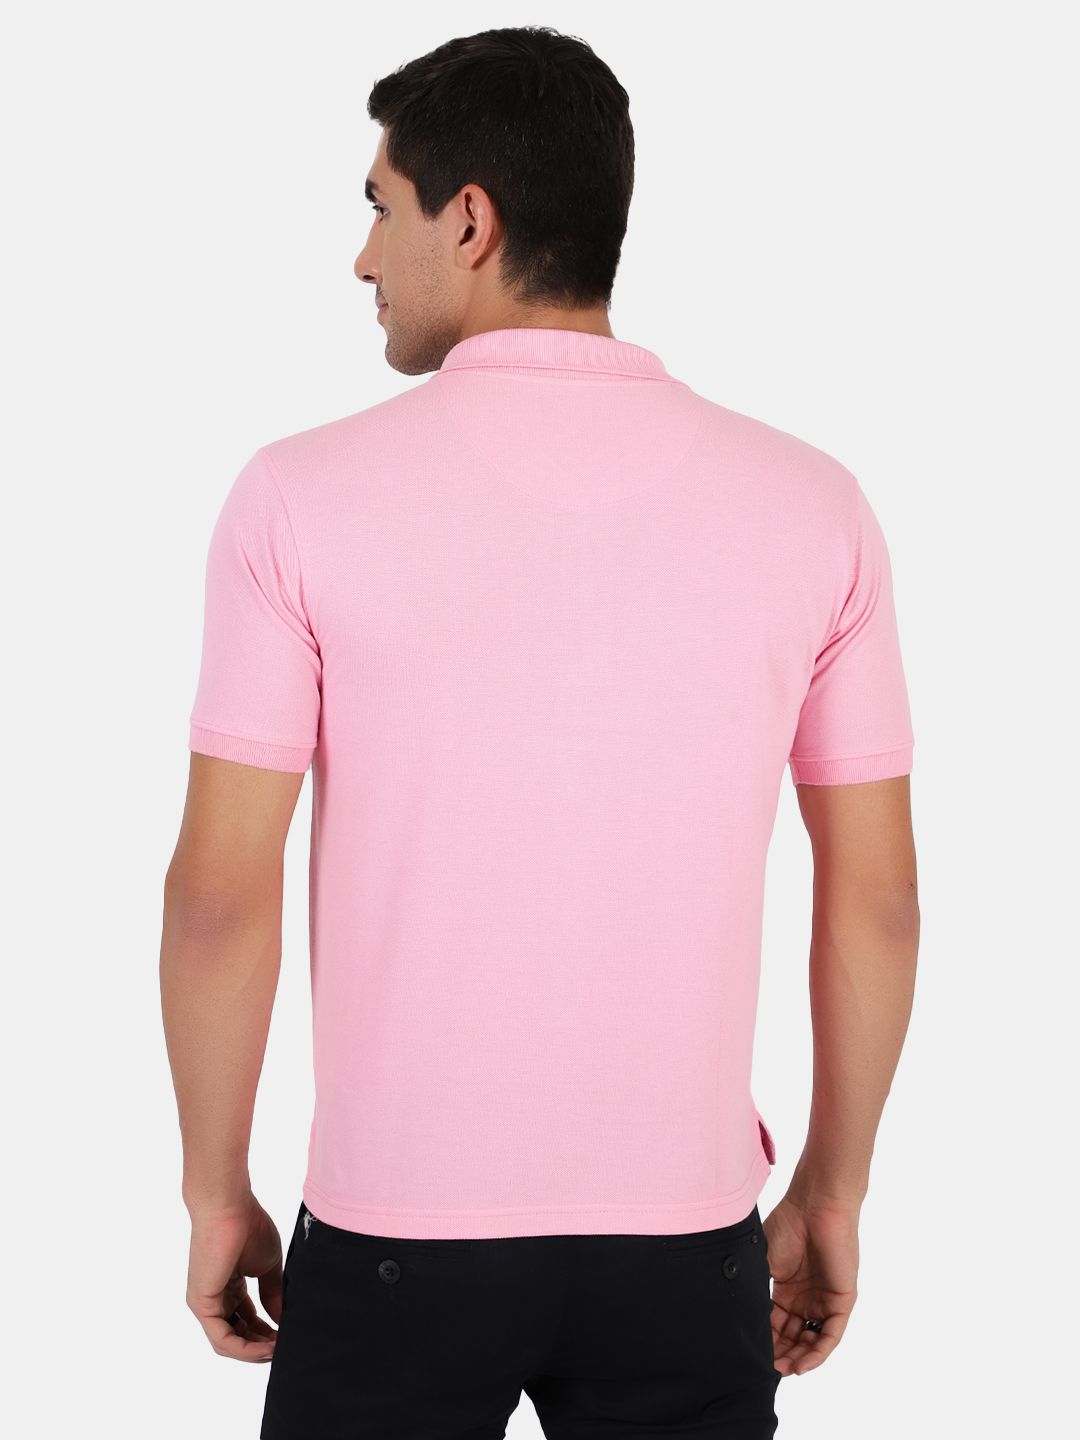 Mentoos Men Poly Cotton Solid Regular Fit Collar Neck Half Sleeves Polo T-Shirt Pink Mentoos